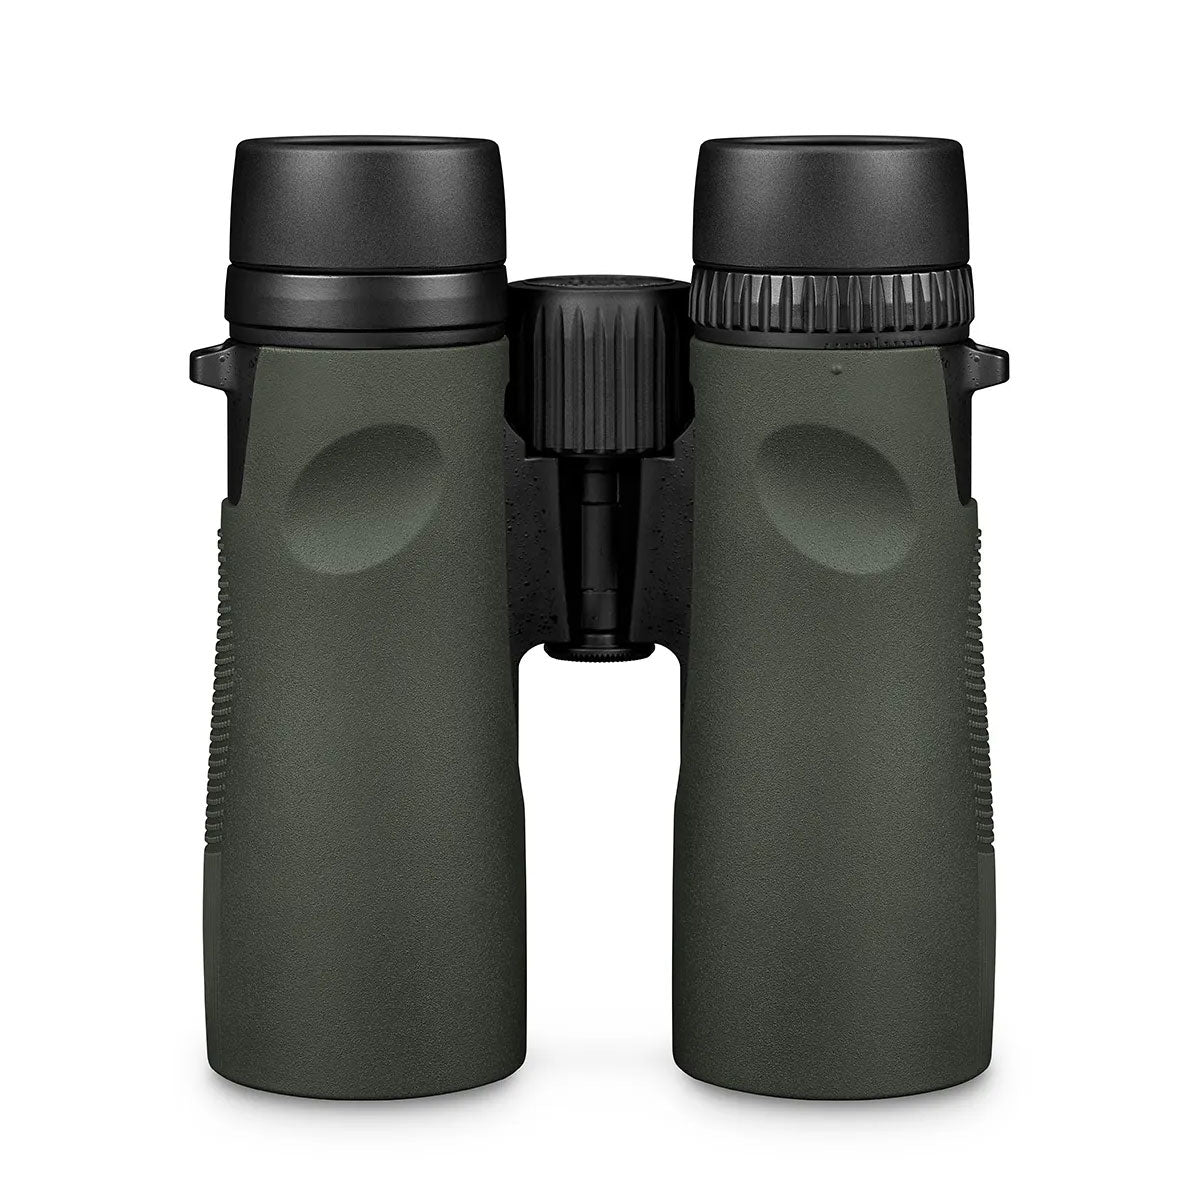 Vortex Diamondback HD 8x42 Binocular buy online from red mills outdoor pursuits ireland kilkenny - back side